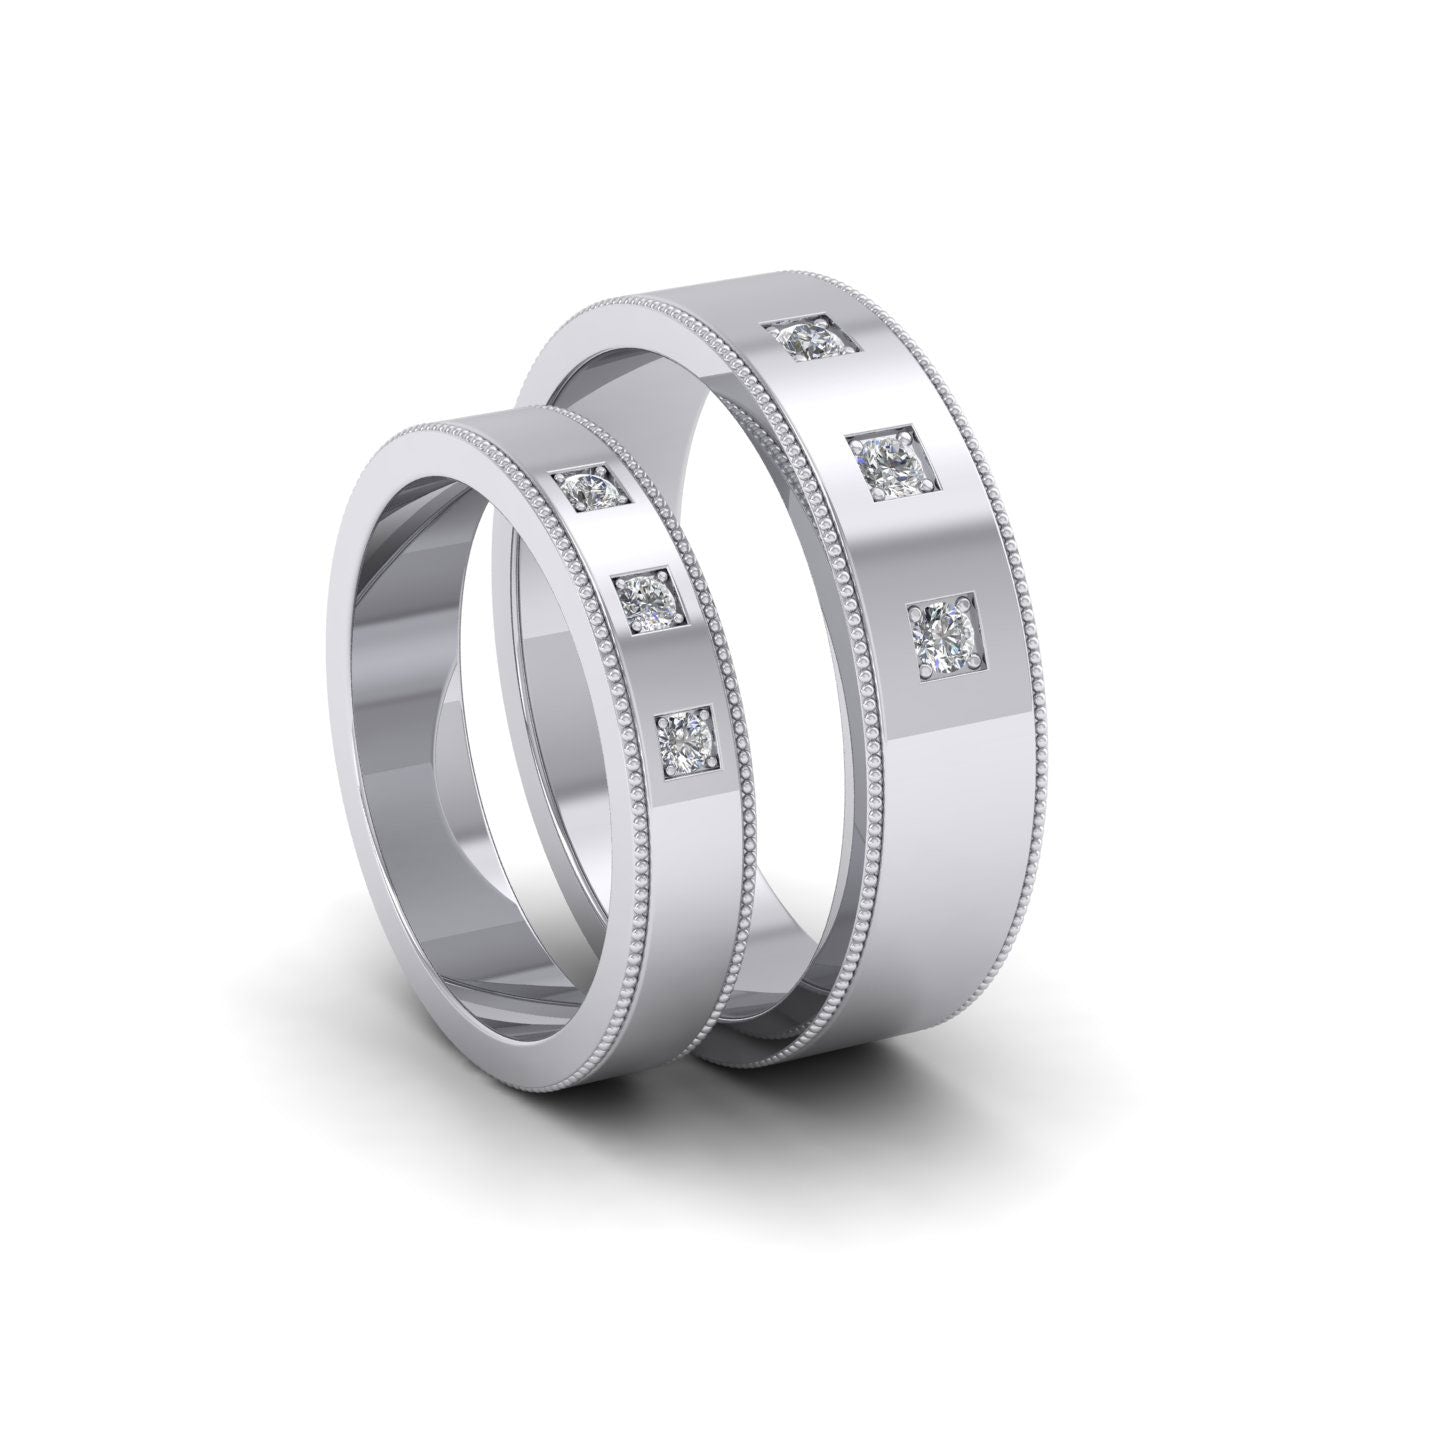 Three Diamonds With Square Setting 950 Palladium 6mm Wedding Ring With Millgrain Edge